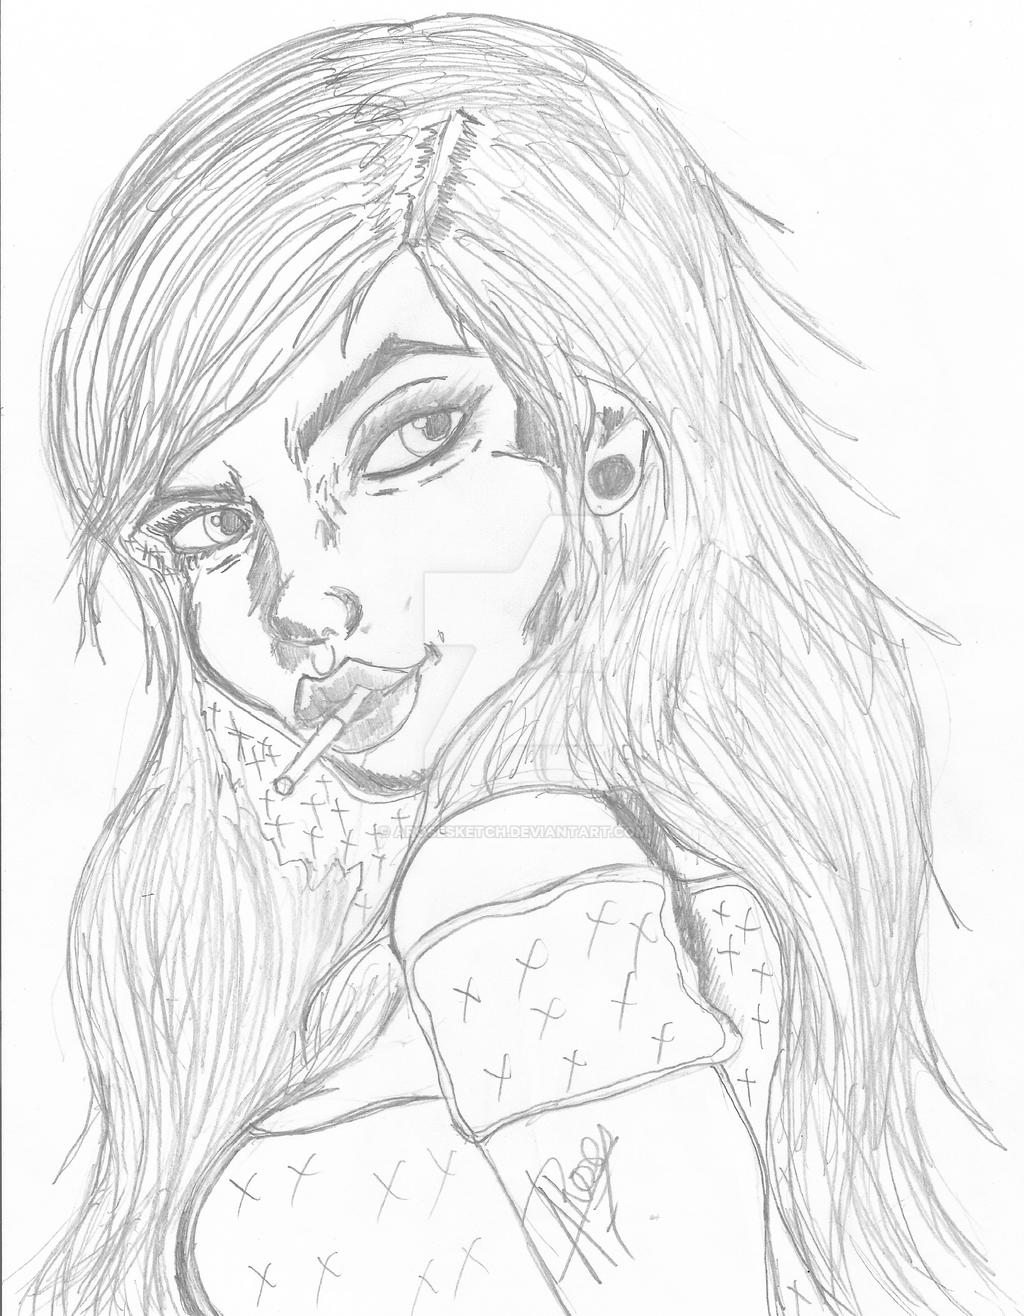 Pencil Sketch of Ashley Rose by arosesketch on DeviantArt